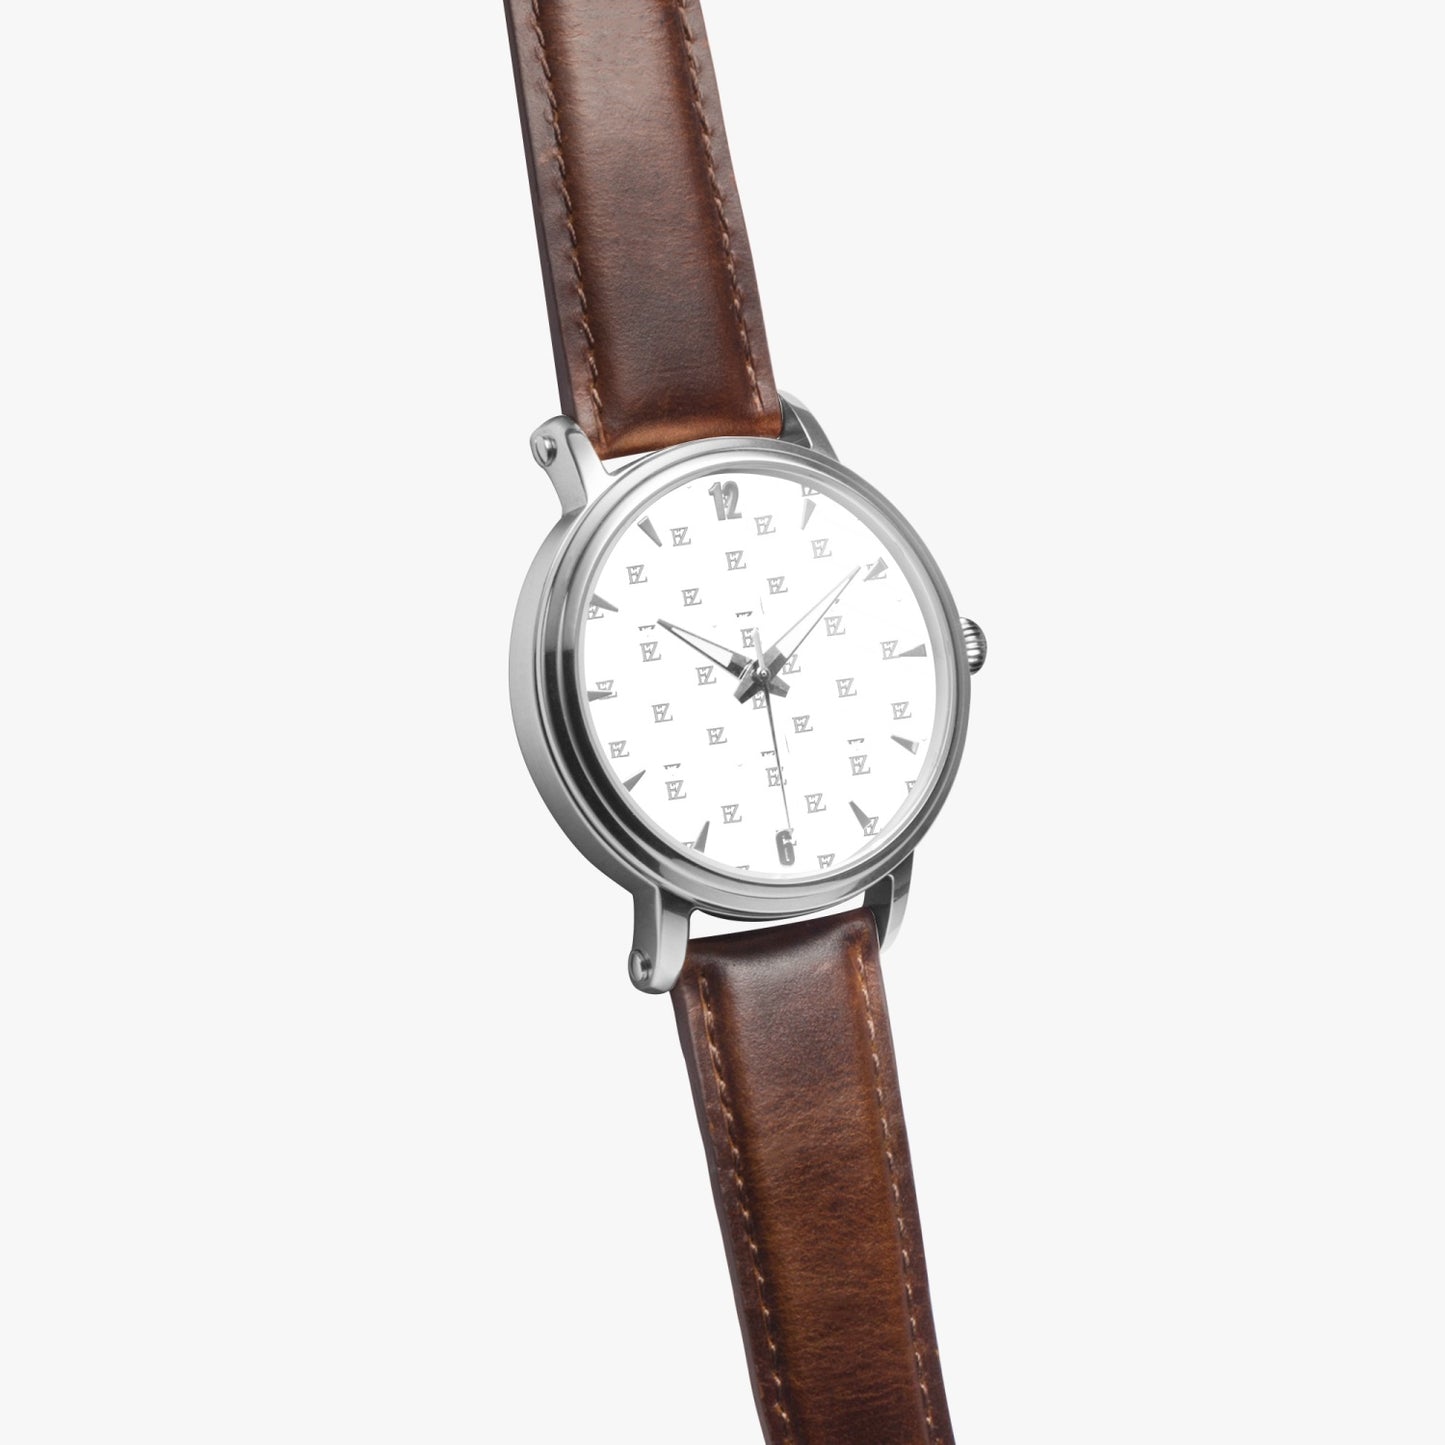 FZ Unisex Automatic Watch (Silver)